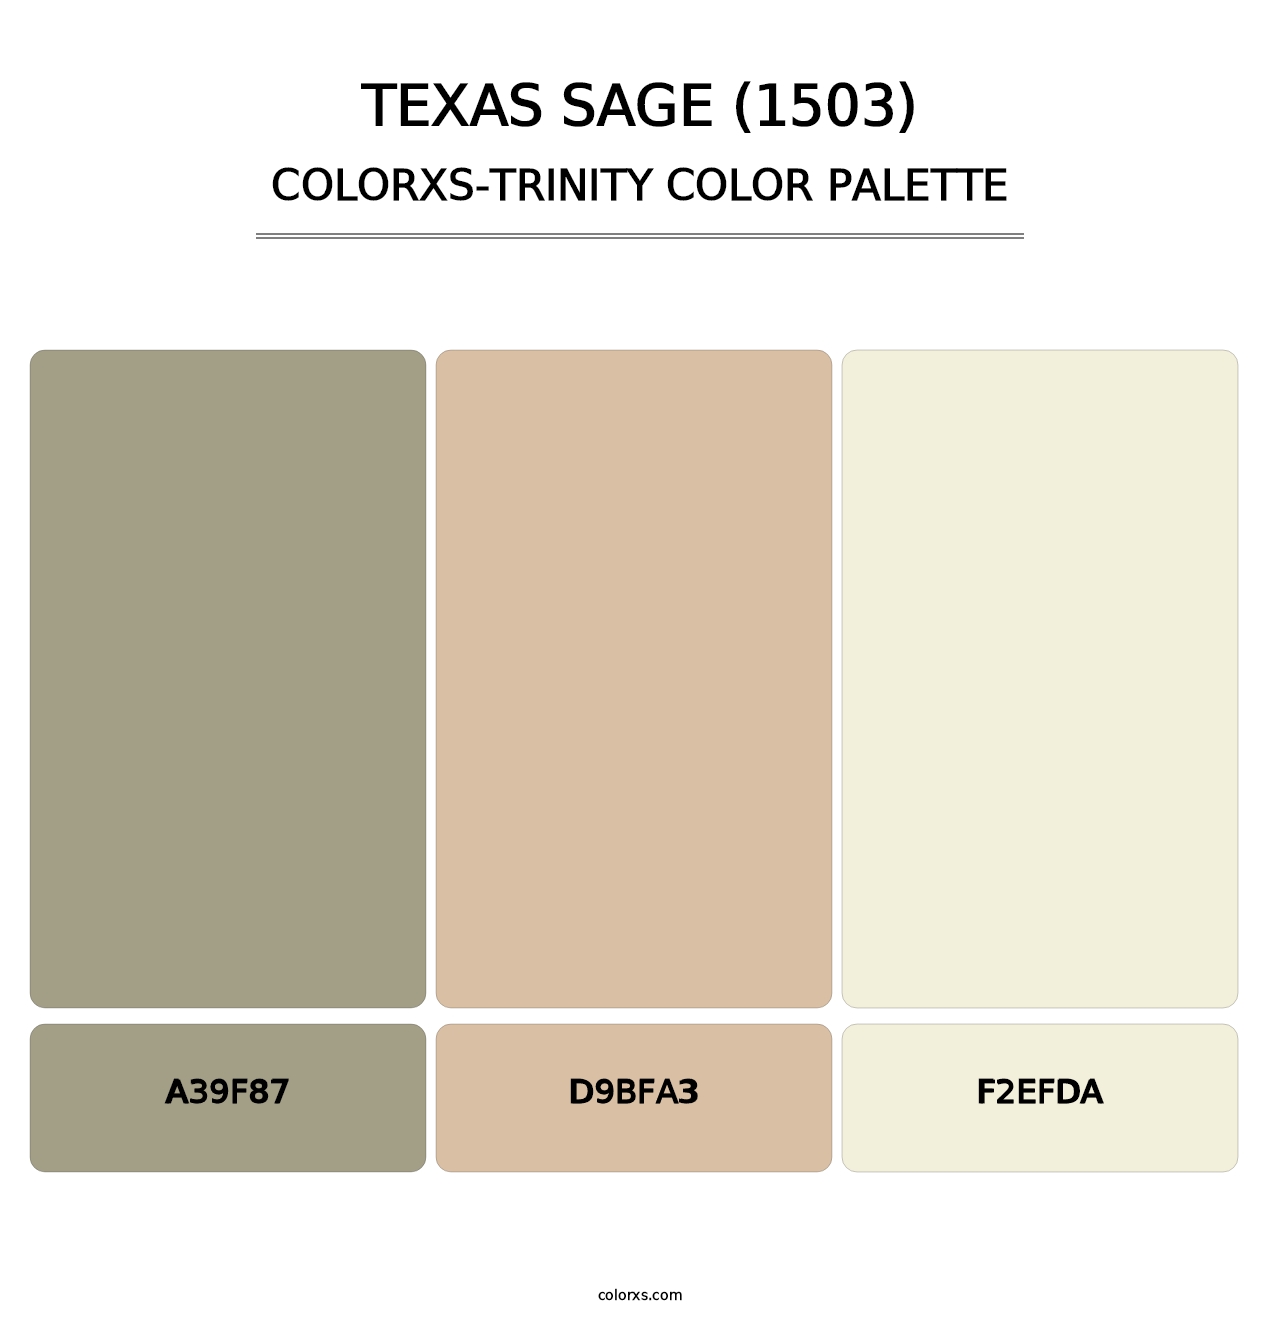 Texas Sage (1503) - Colorxs Trinity Palette